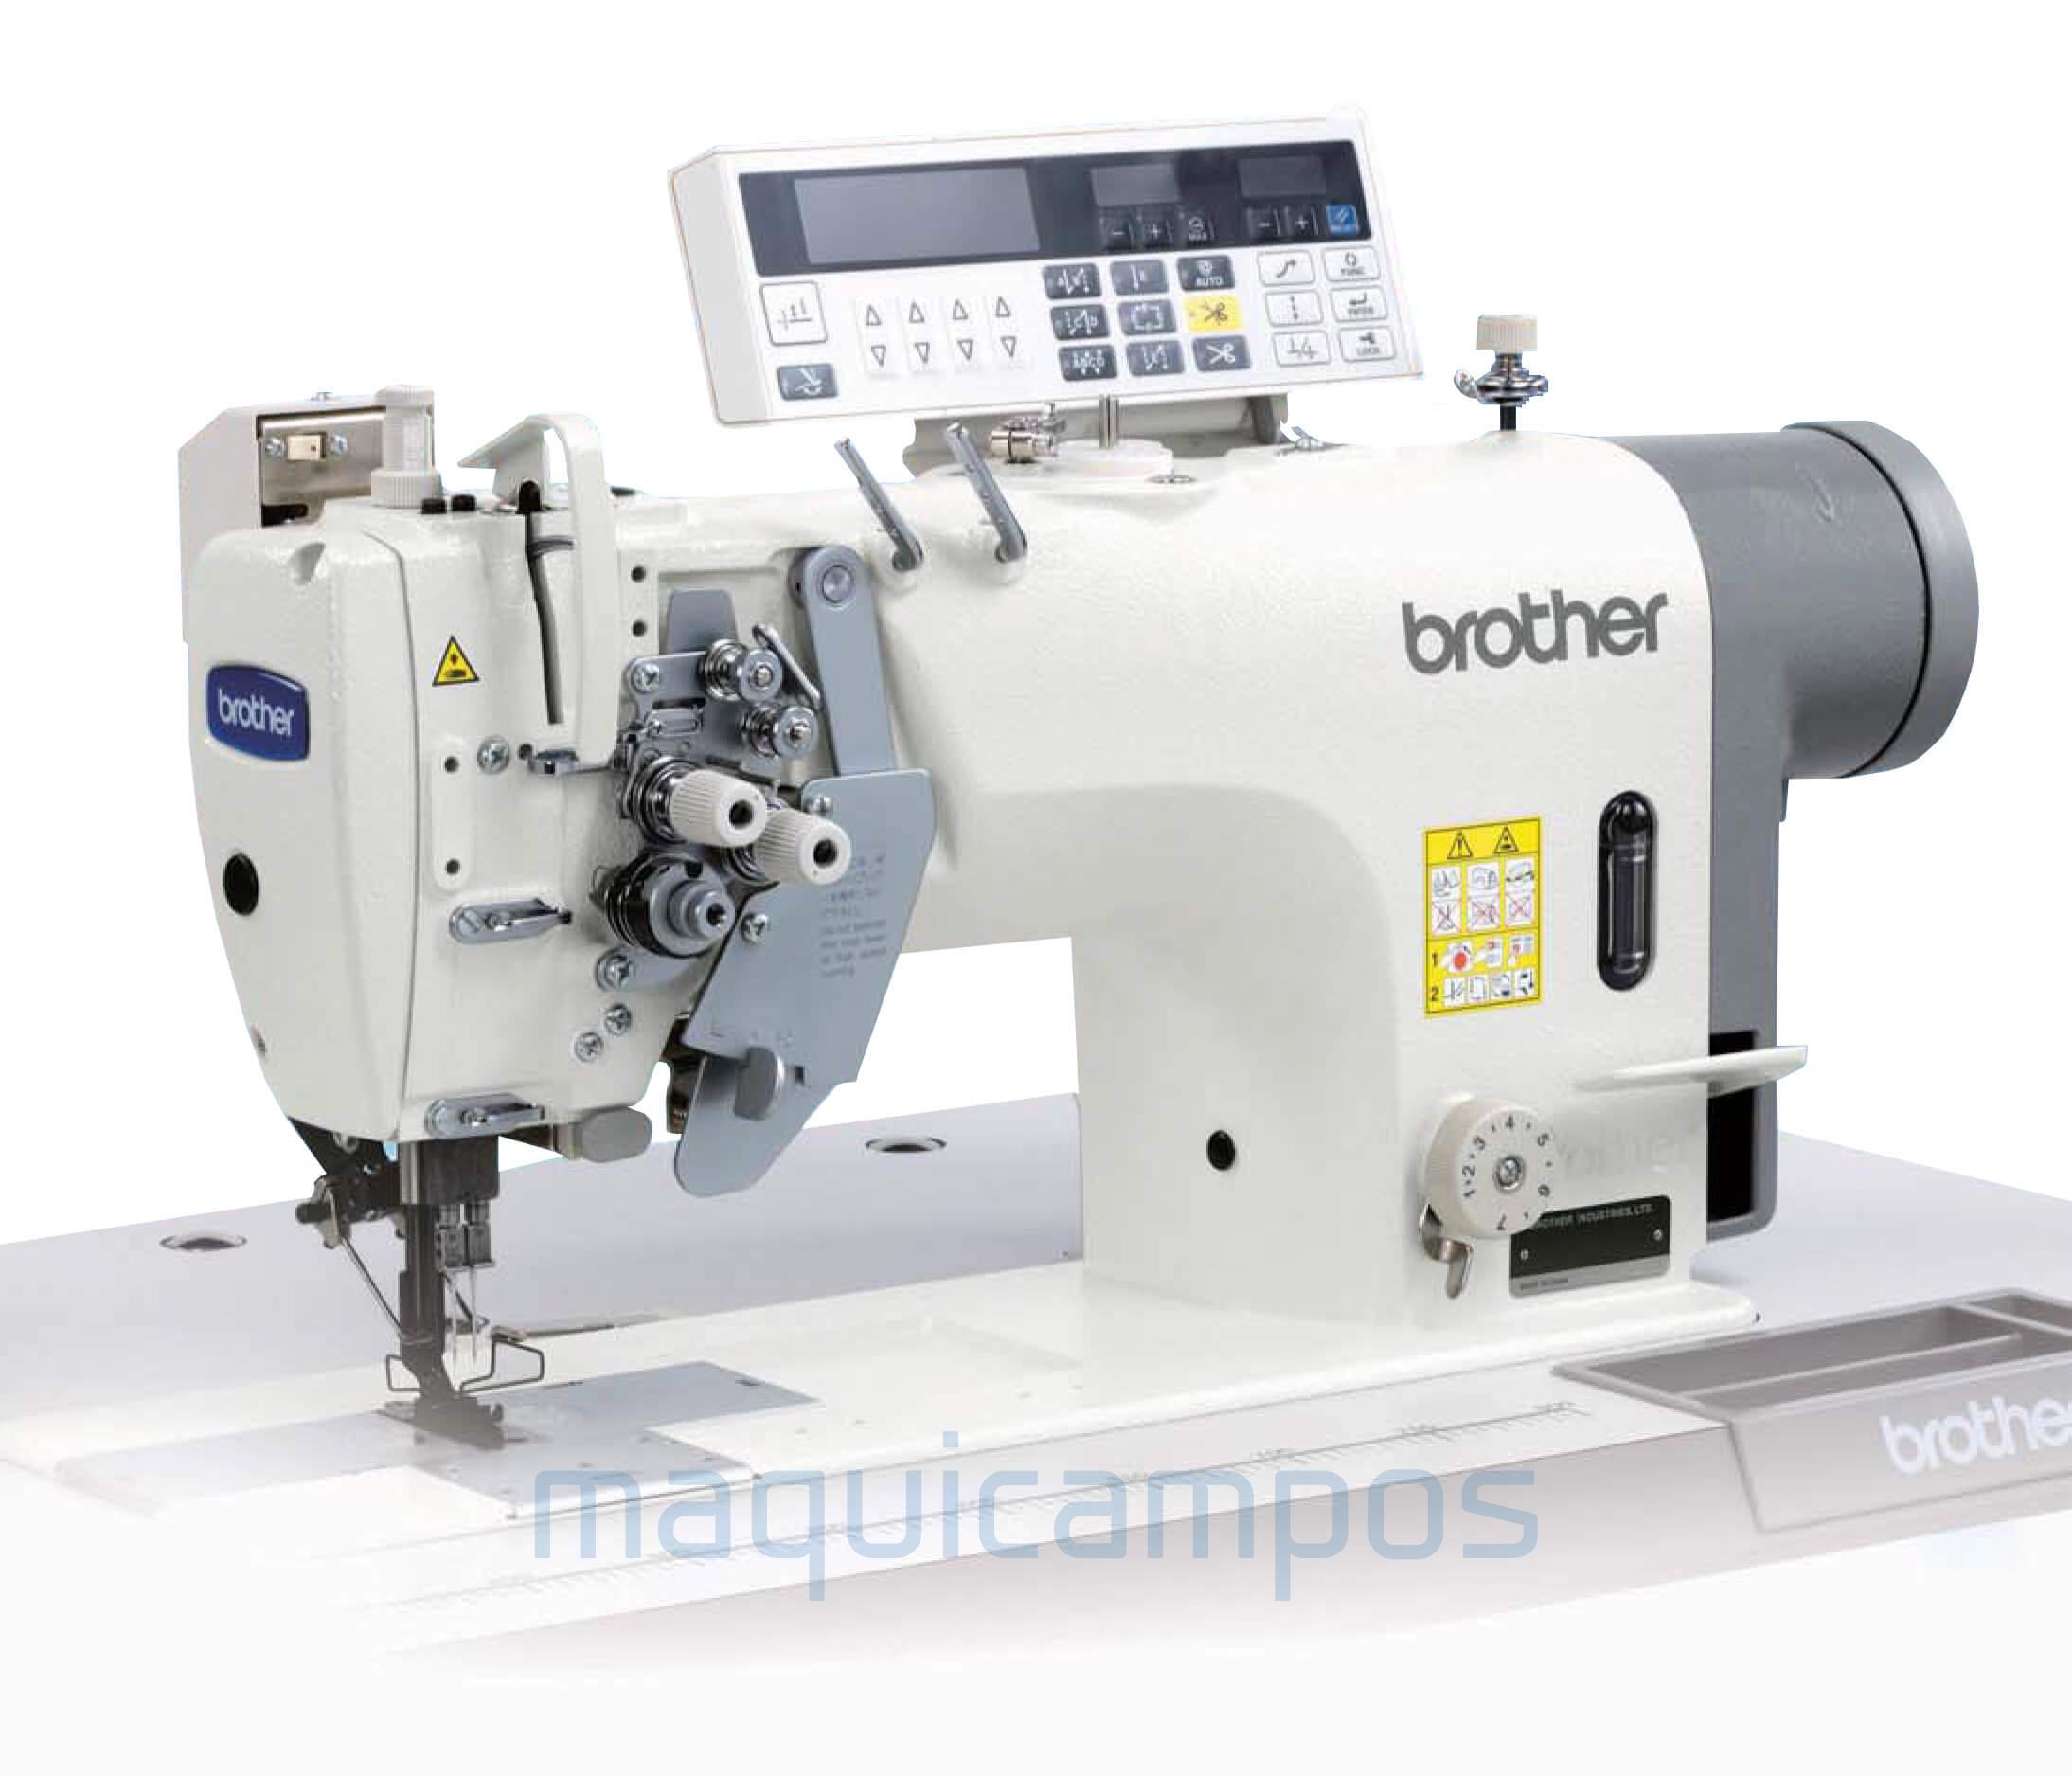 Brother T-8750C Lockstitch Sewing Machine